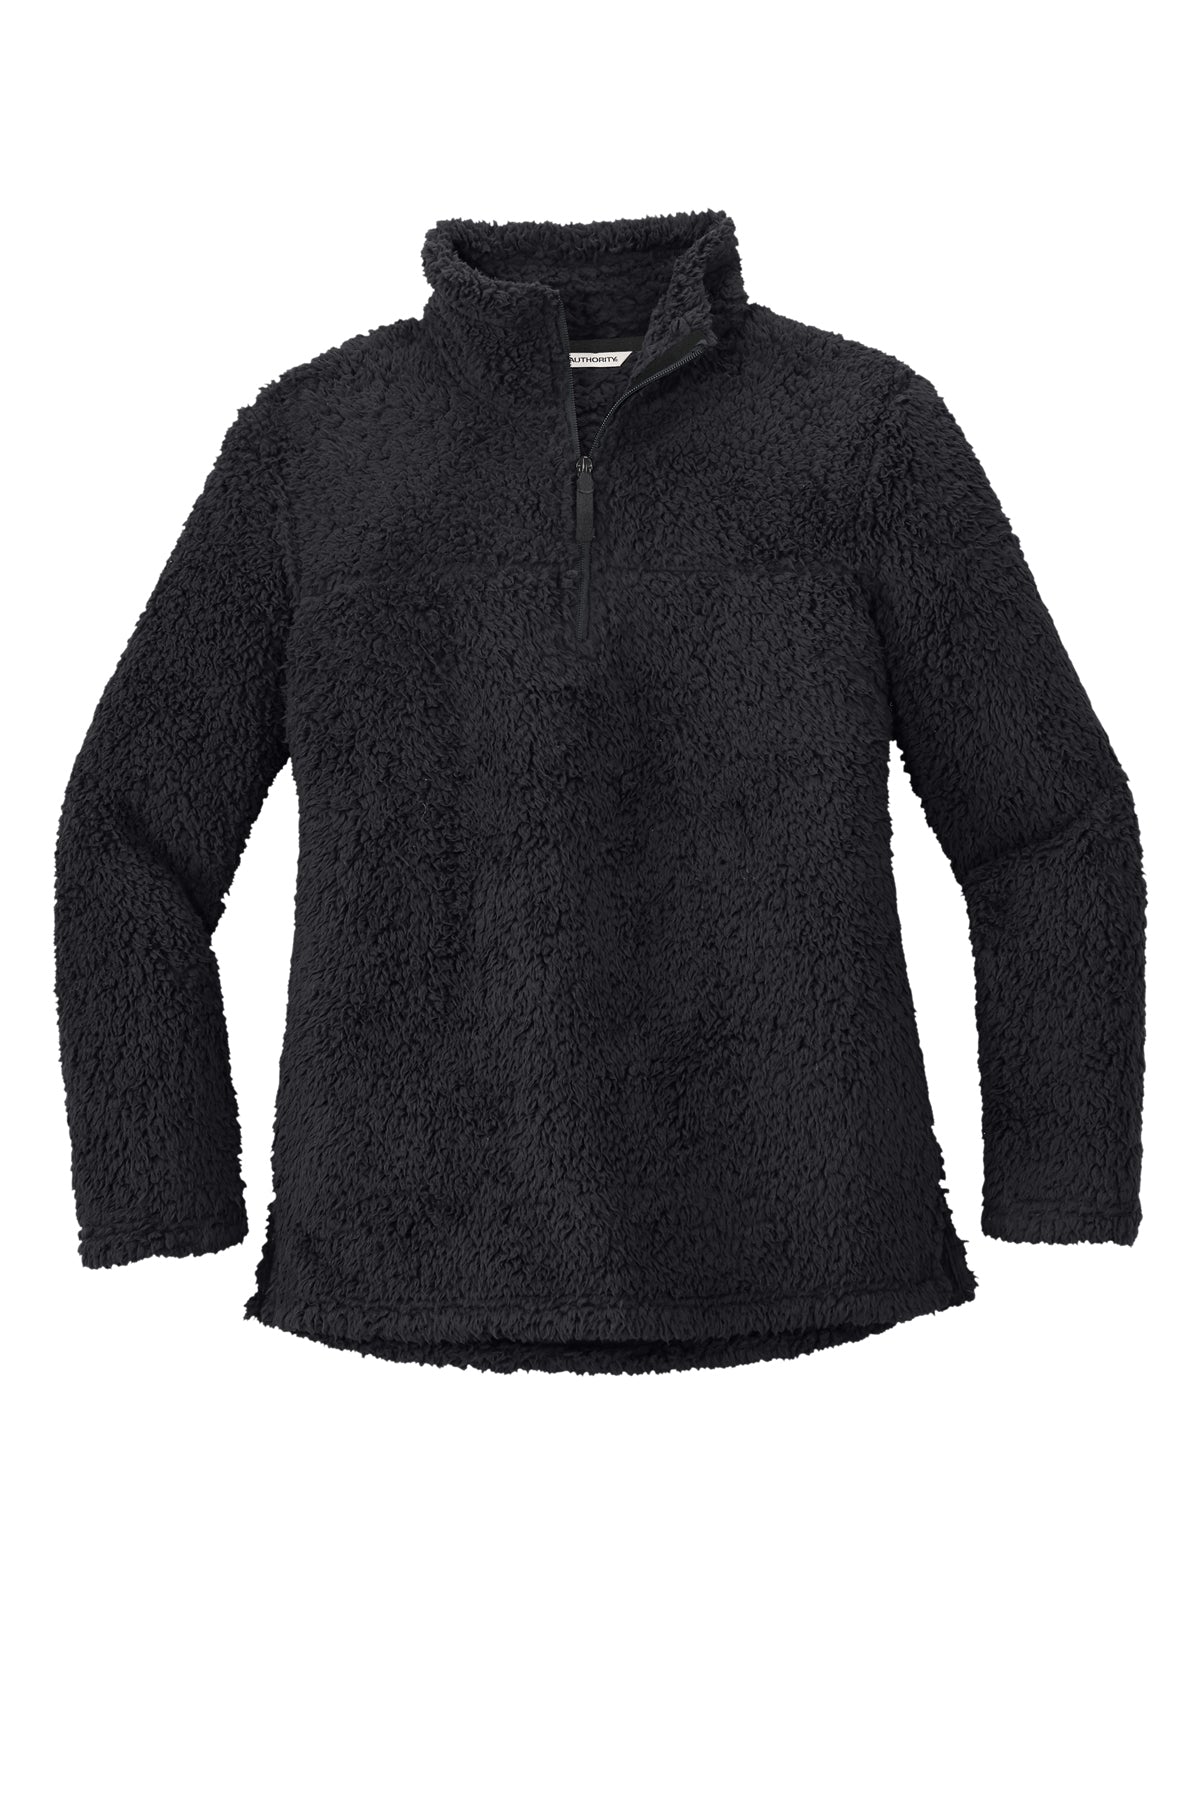 L130 Port Authority® Ladies Cozy 1/4-Zip Fleece